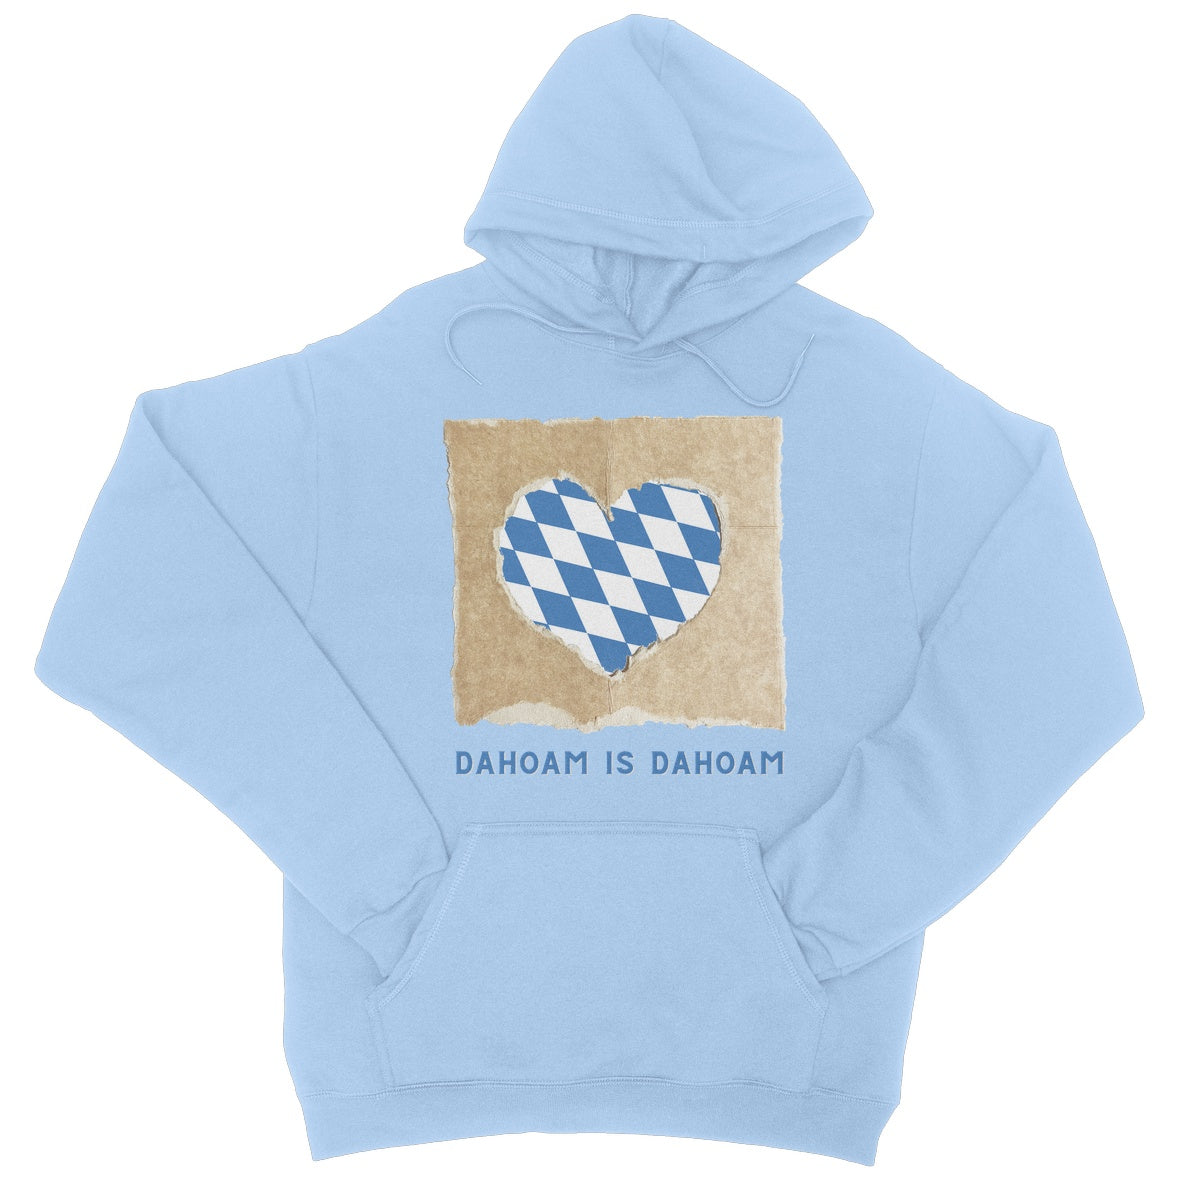 Women's Bavarian Heart Graphic Hoodie "Dahoam is Dahoam" - 3 colours - Bavari Shop - Bavarian Outfits, Dirndl, Lederhosen & Accessories